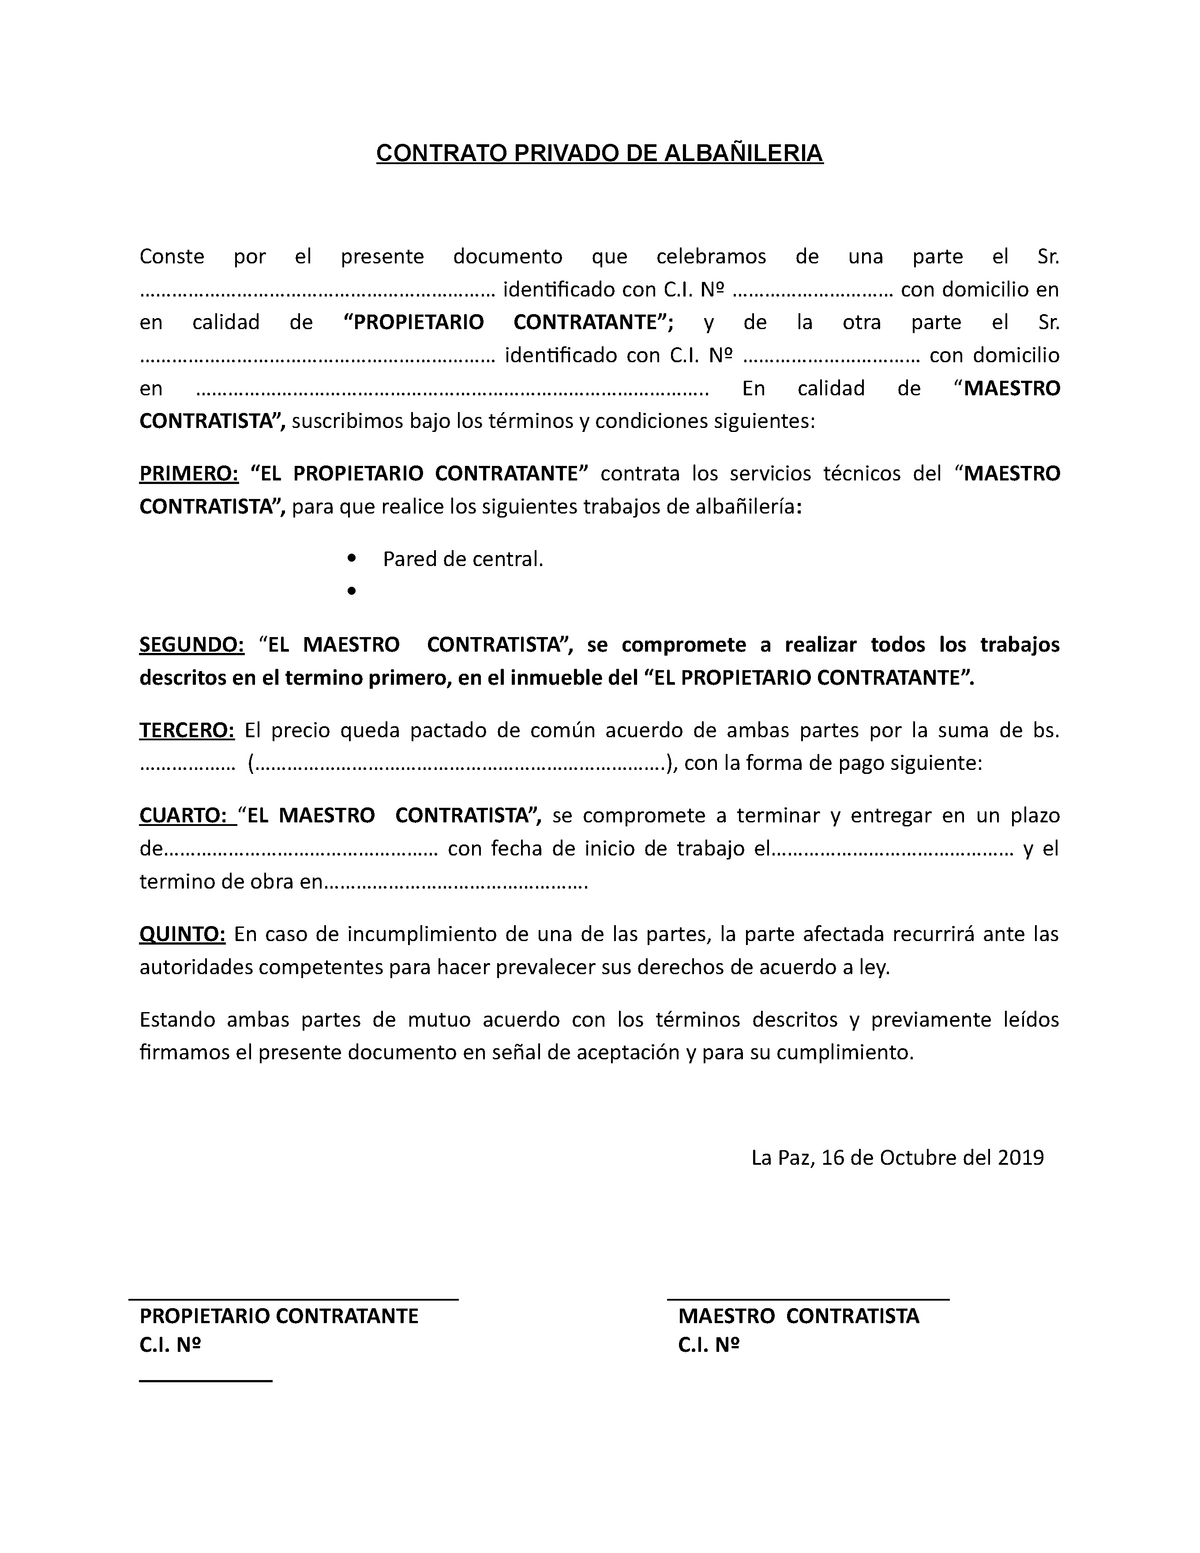 Contrato Privado DE Albañileria, para contrato de servicios - CONTRATO  PRIVADO DE ALBAÑILERIA Conste - Studocu